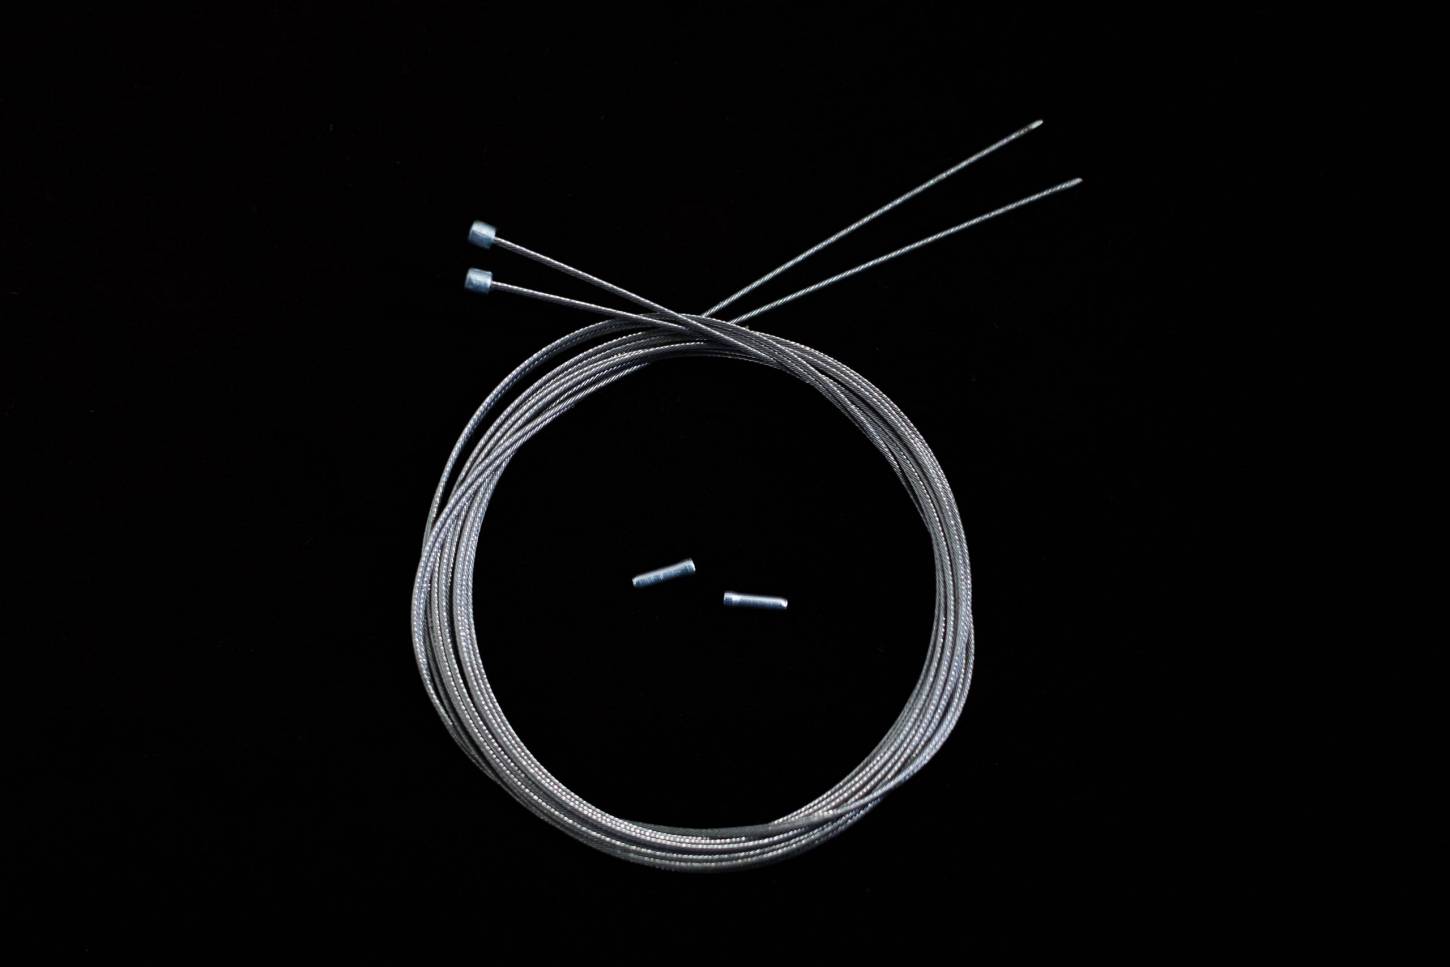 Cables de cambio Promax cable interno 1,1mm/1,2mm x 2200mm incl. fundas finales Cable Bowden Campa